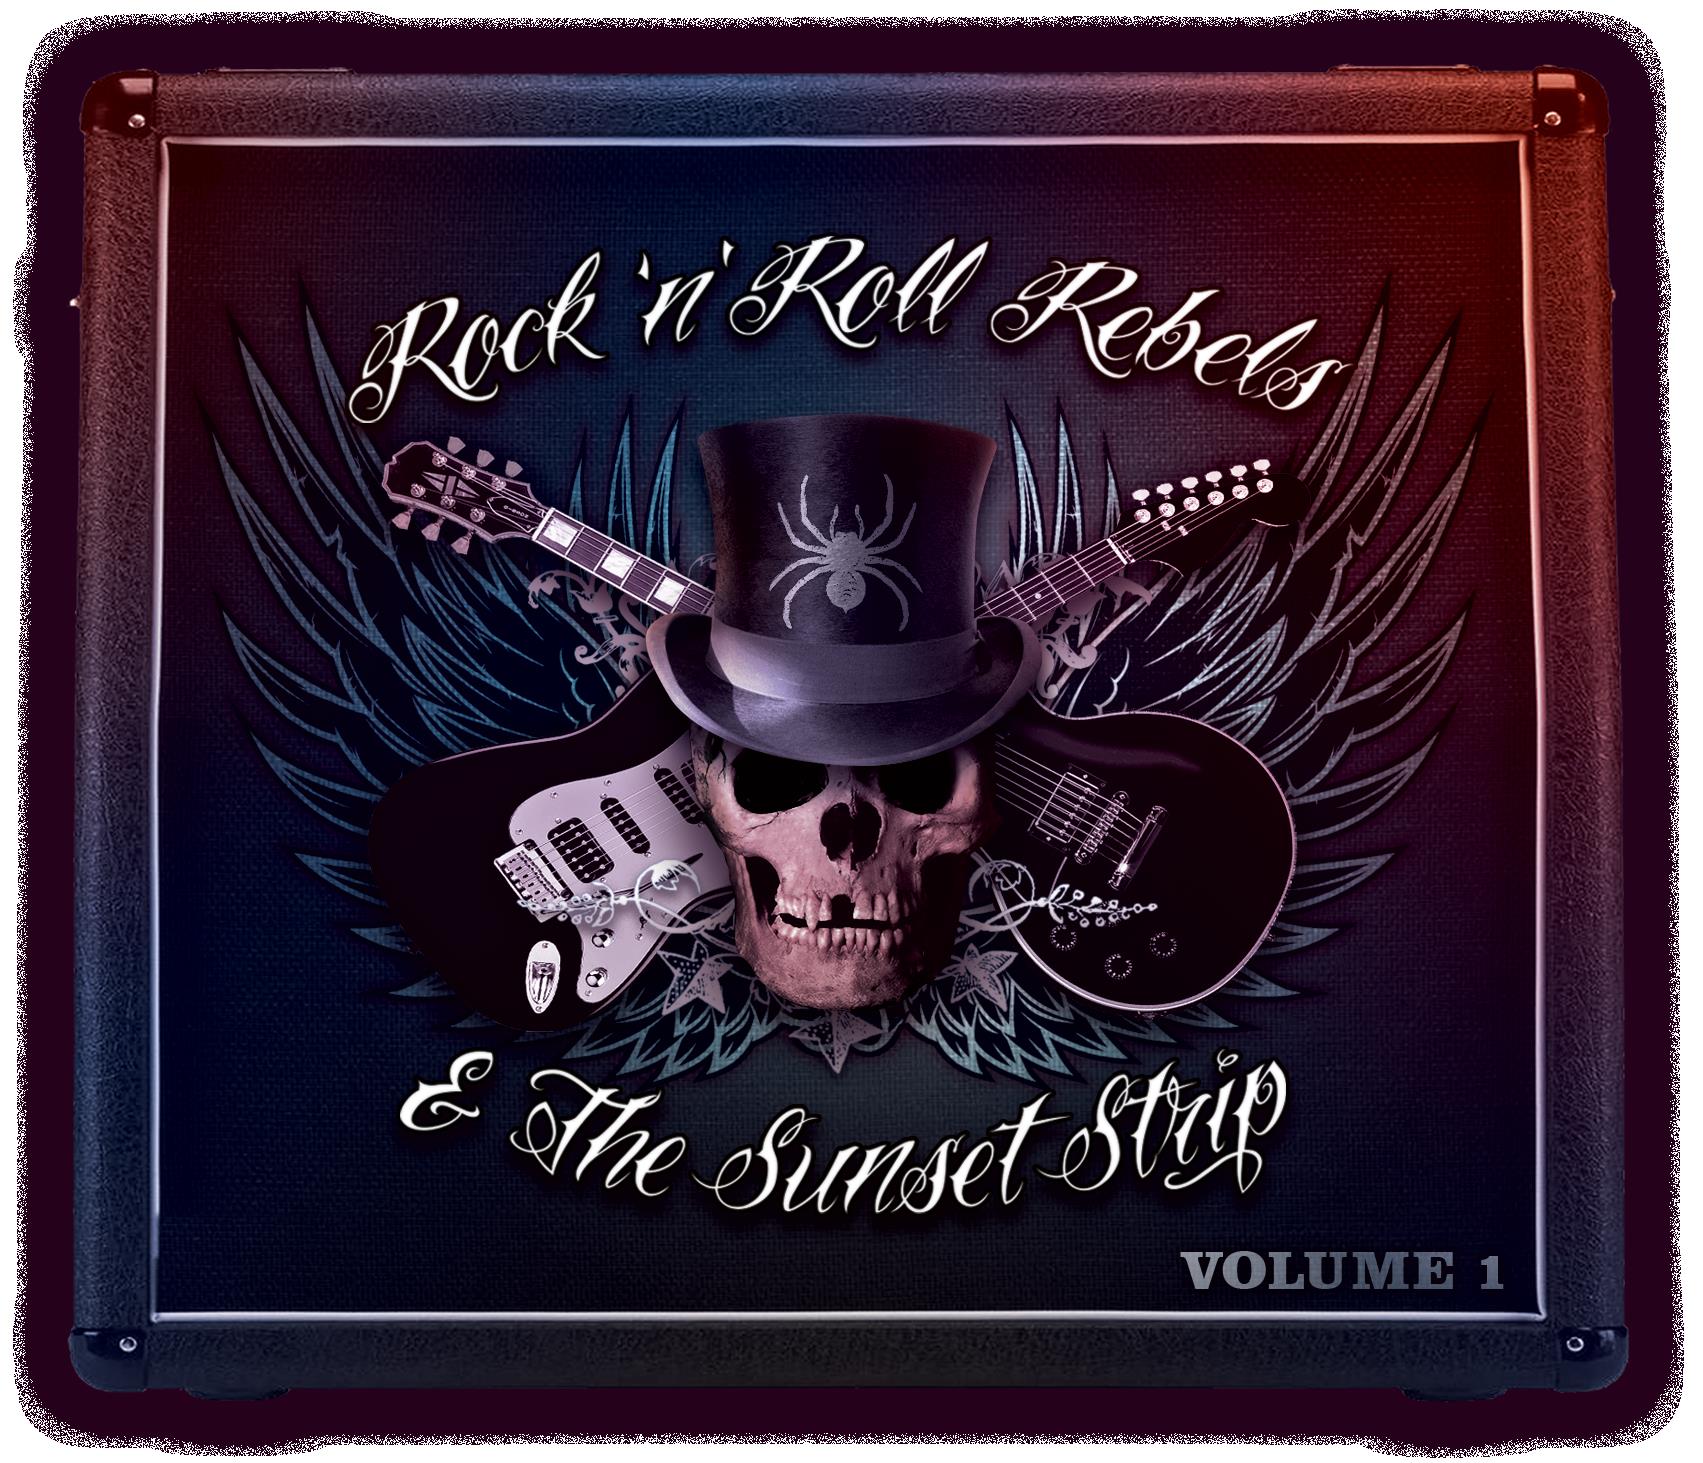 Rock 'N' Roll Rebels & the Sunset Strip - Volume 1 